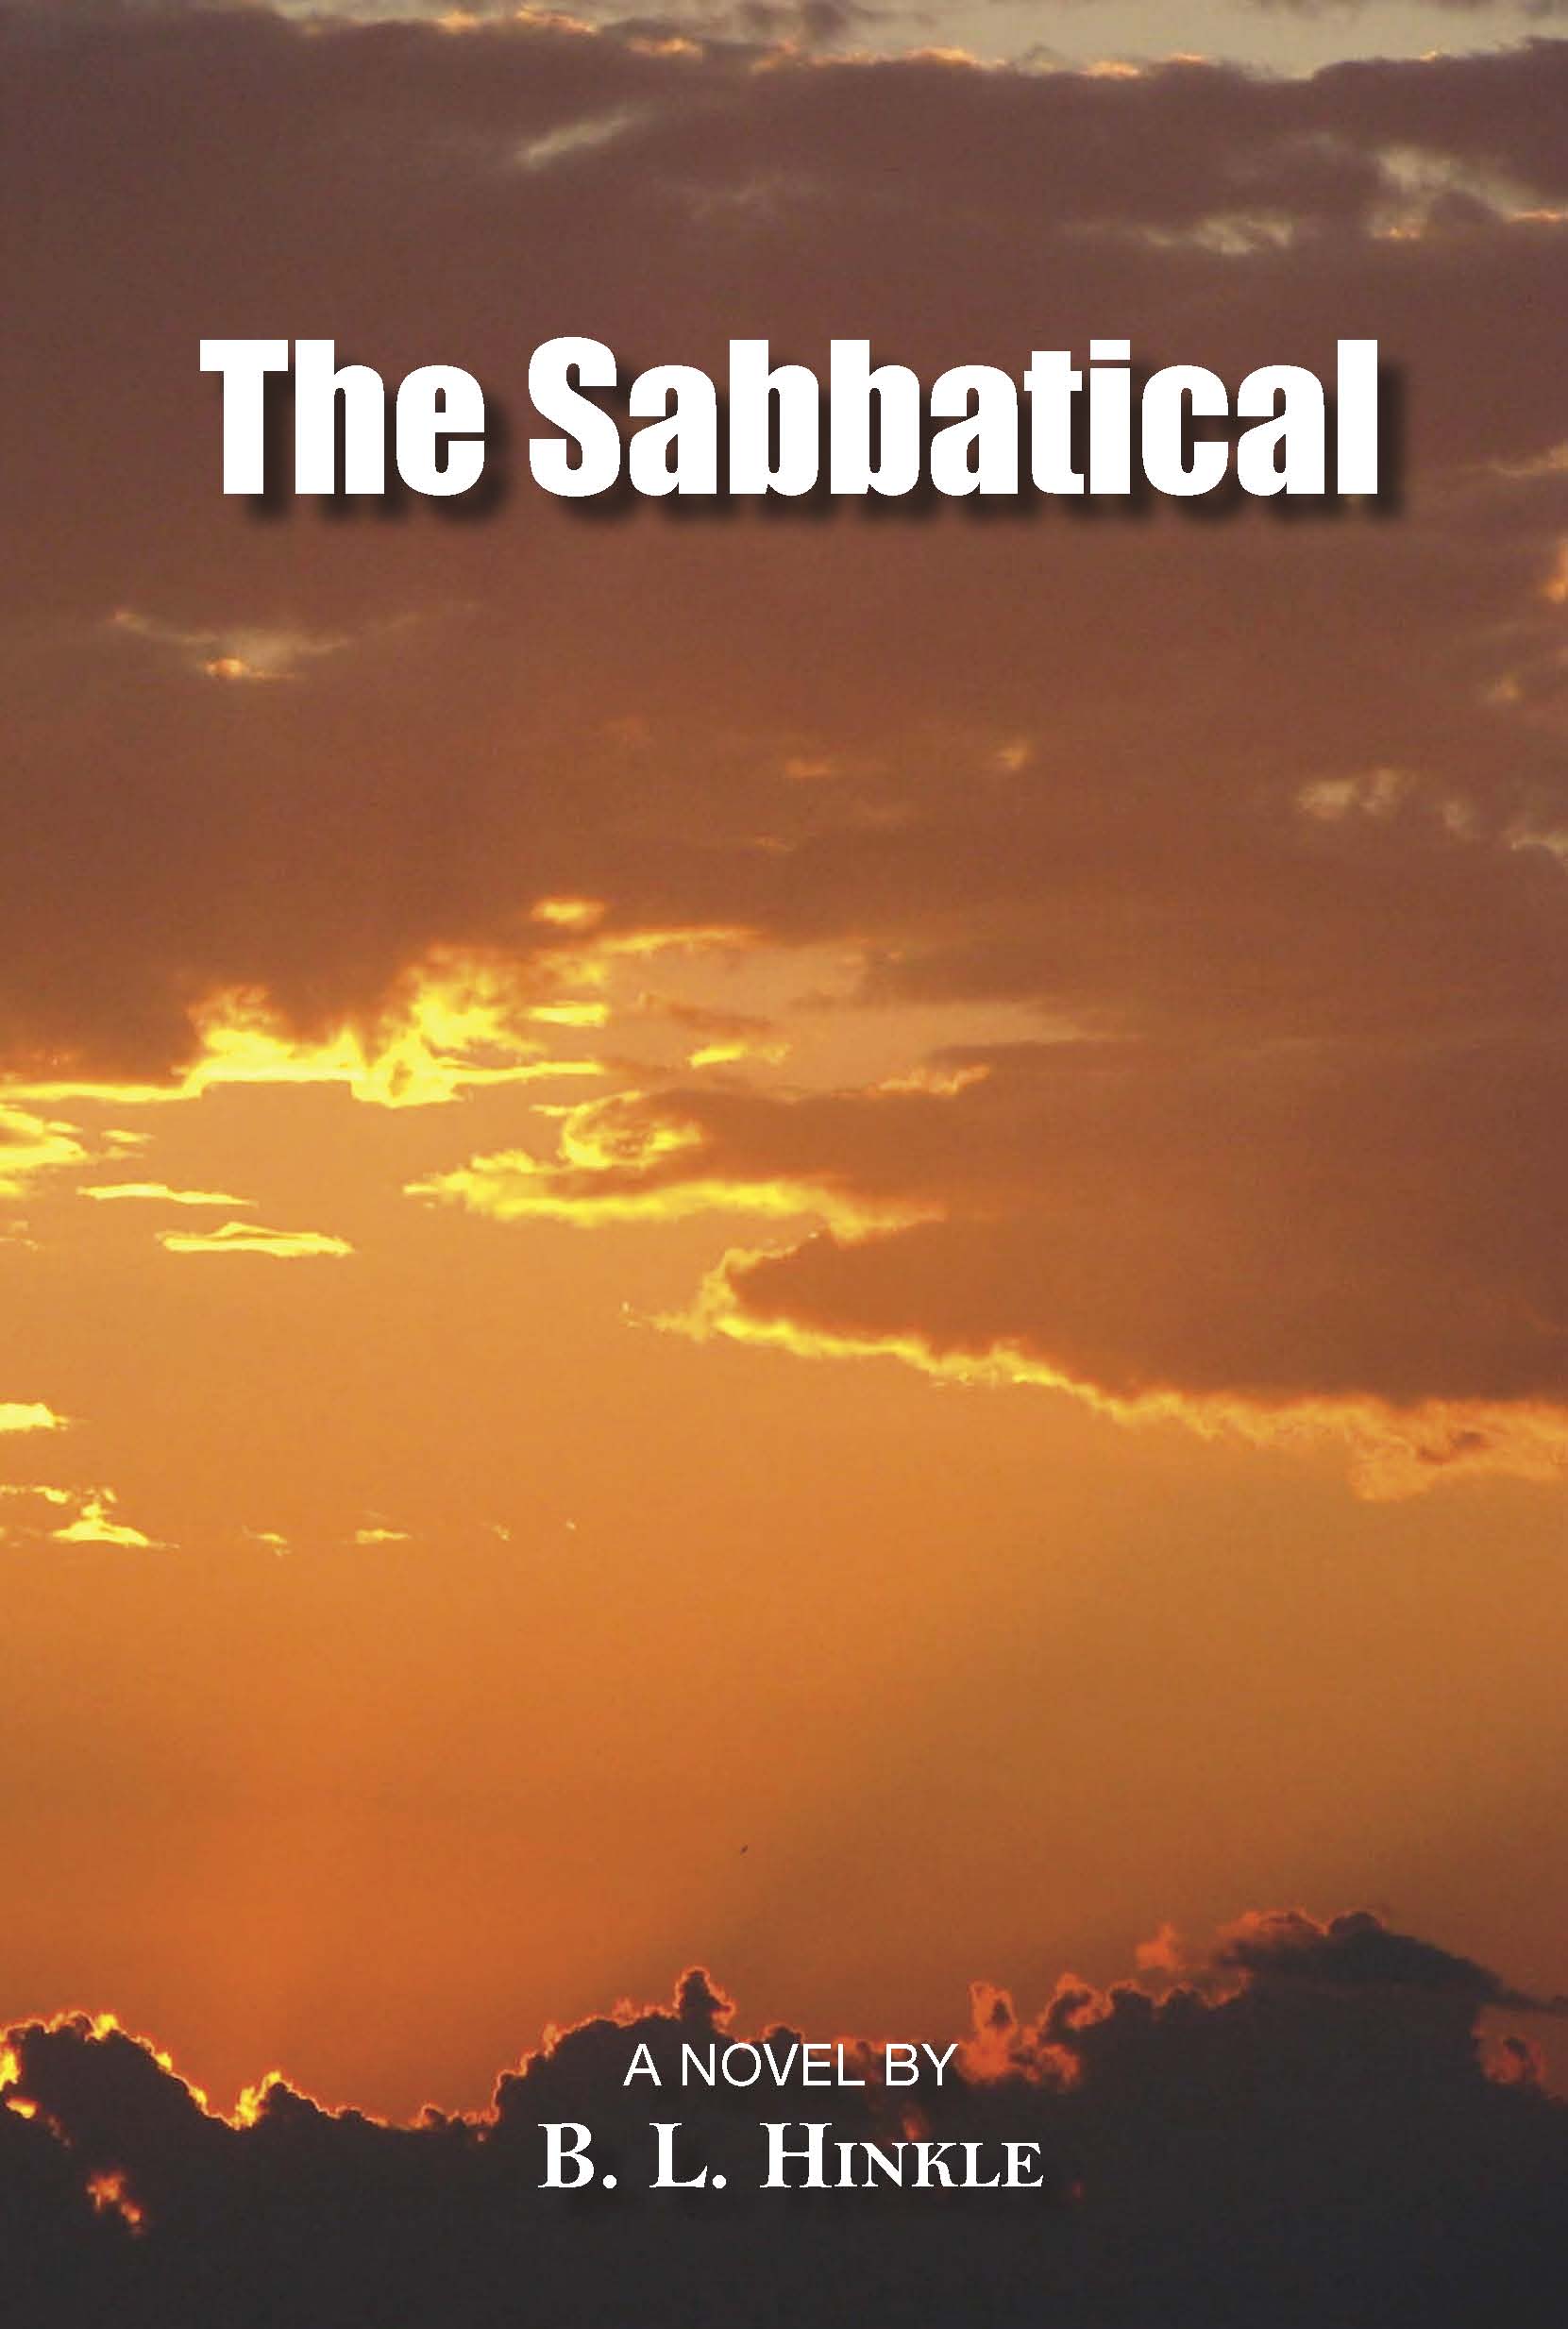 The Sabbatical, a novel by B. L. (Bob) Hinkle